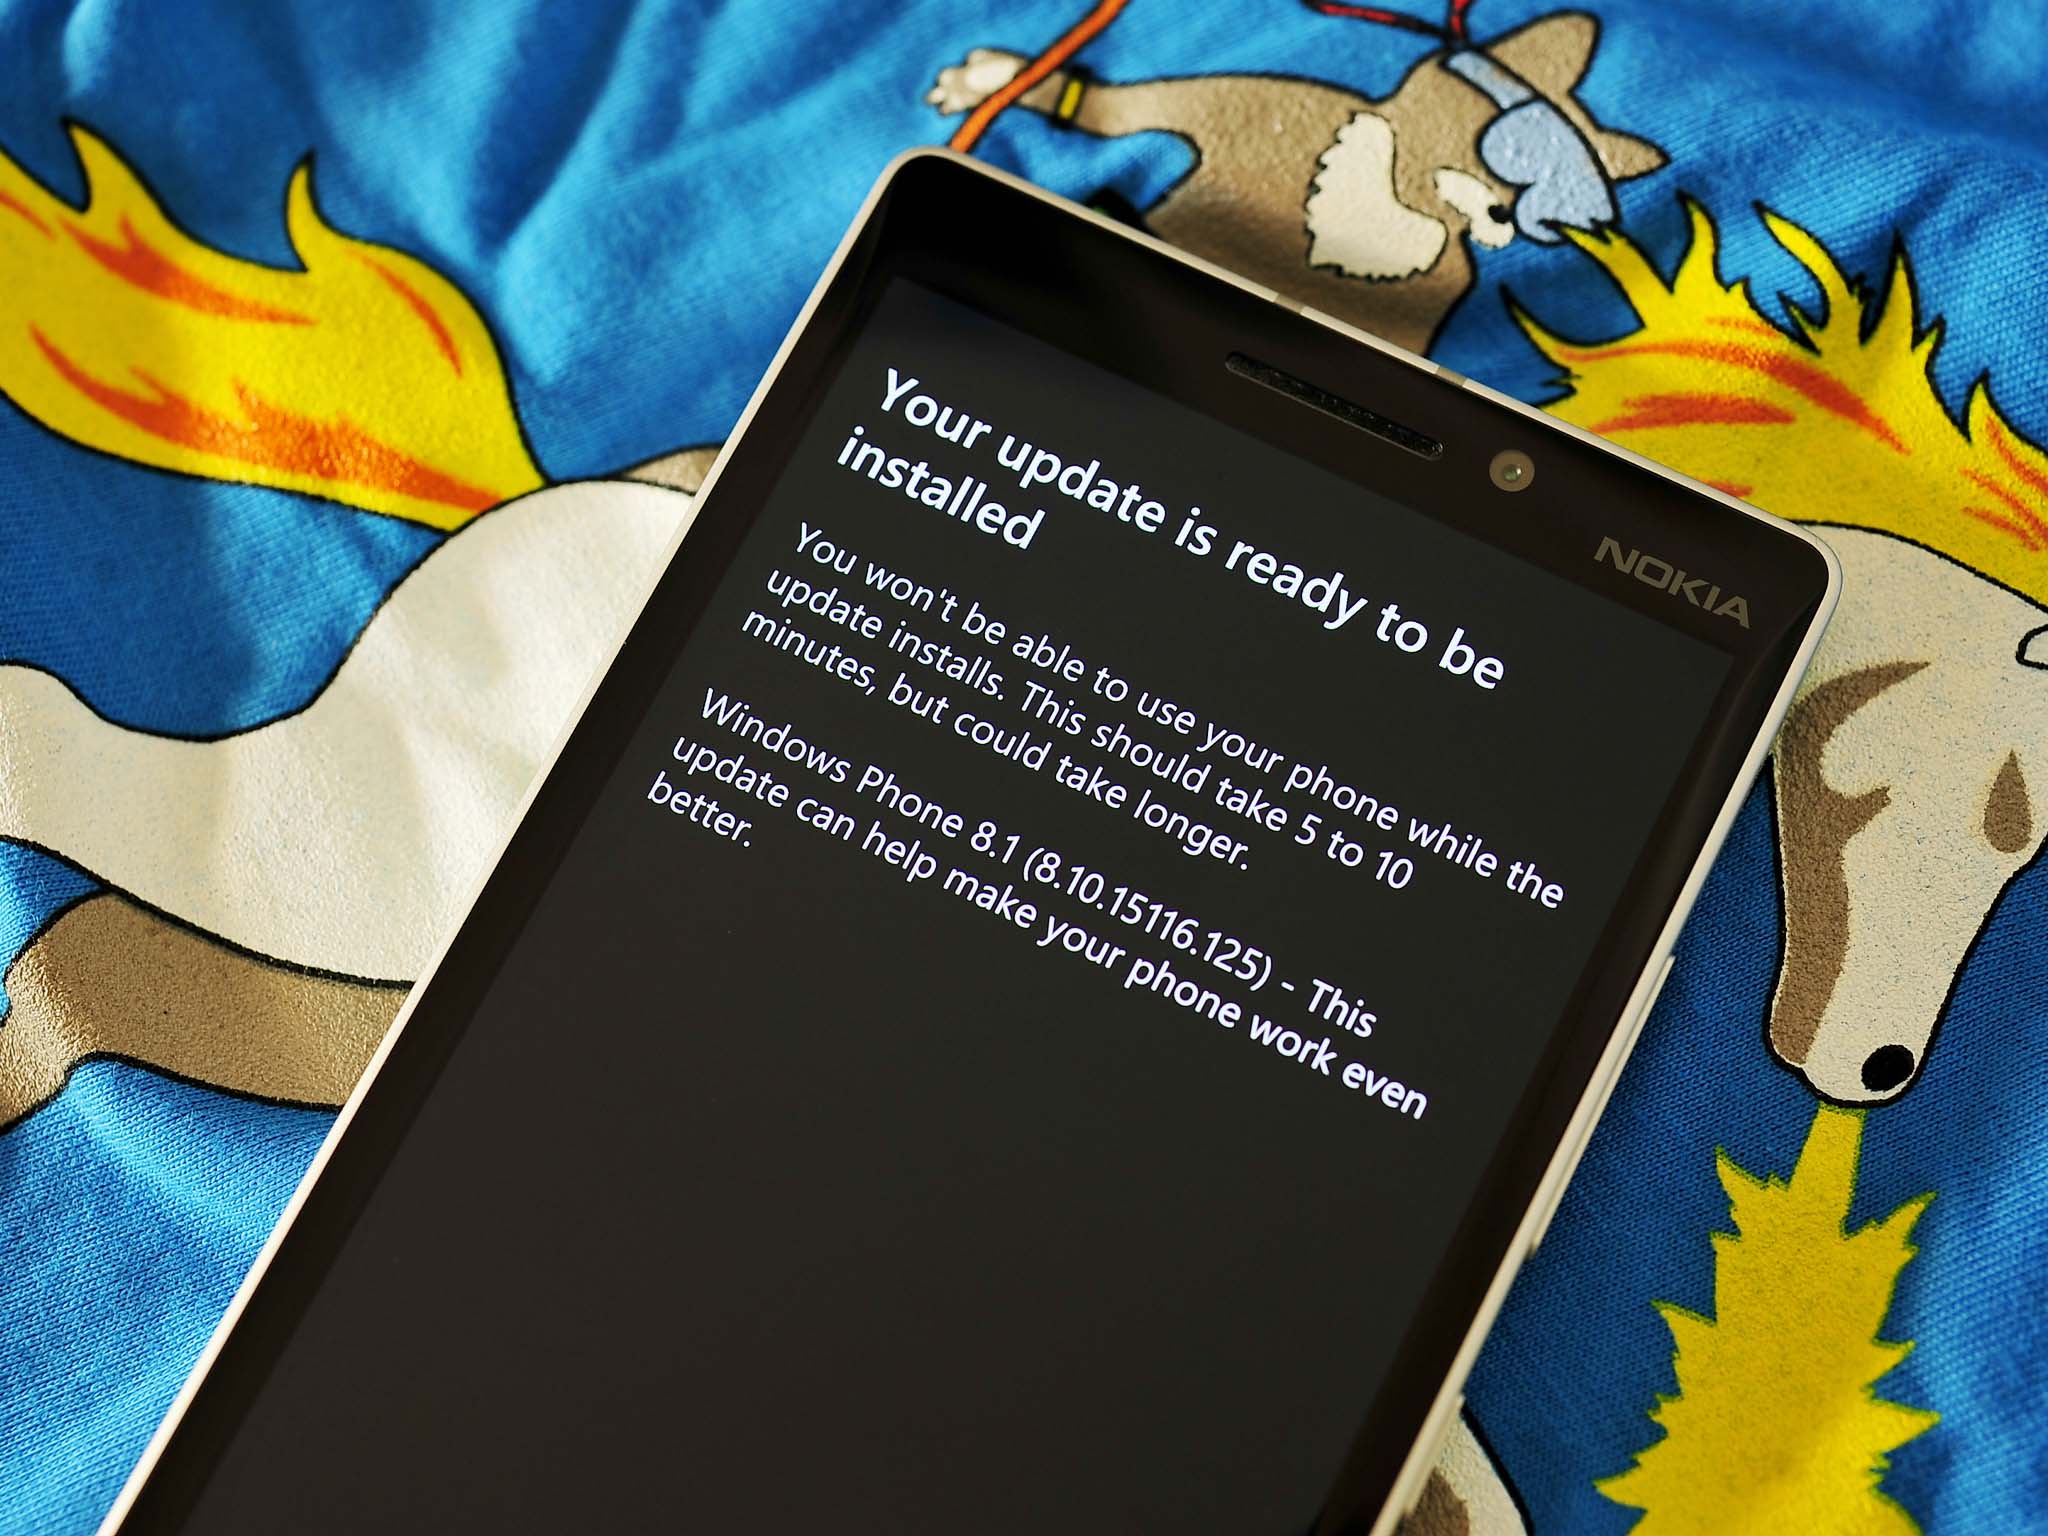 Windows Phone 8.1 Update 2 